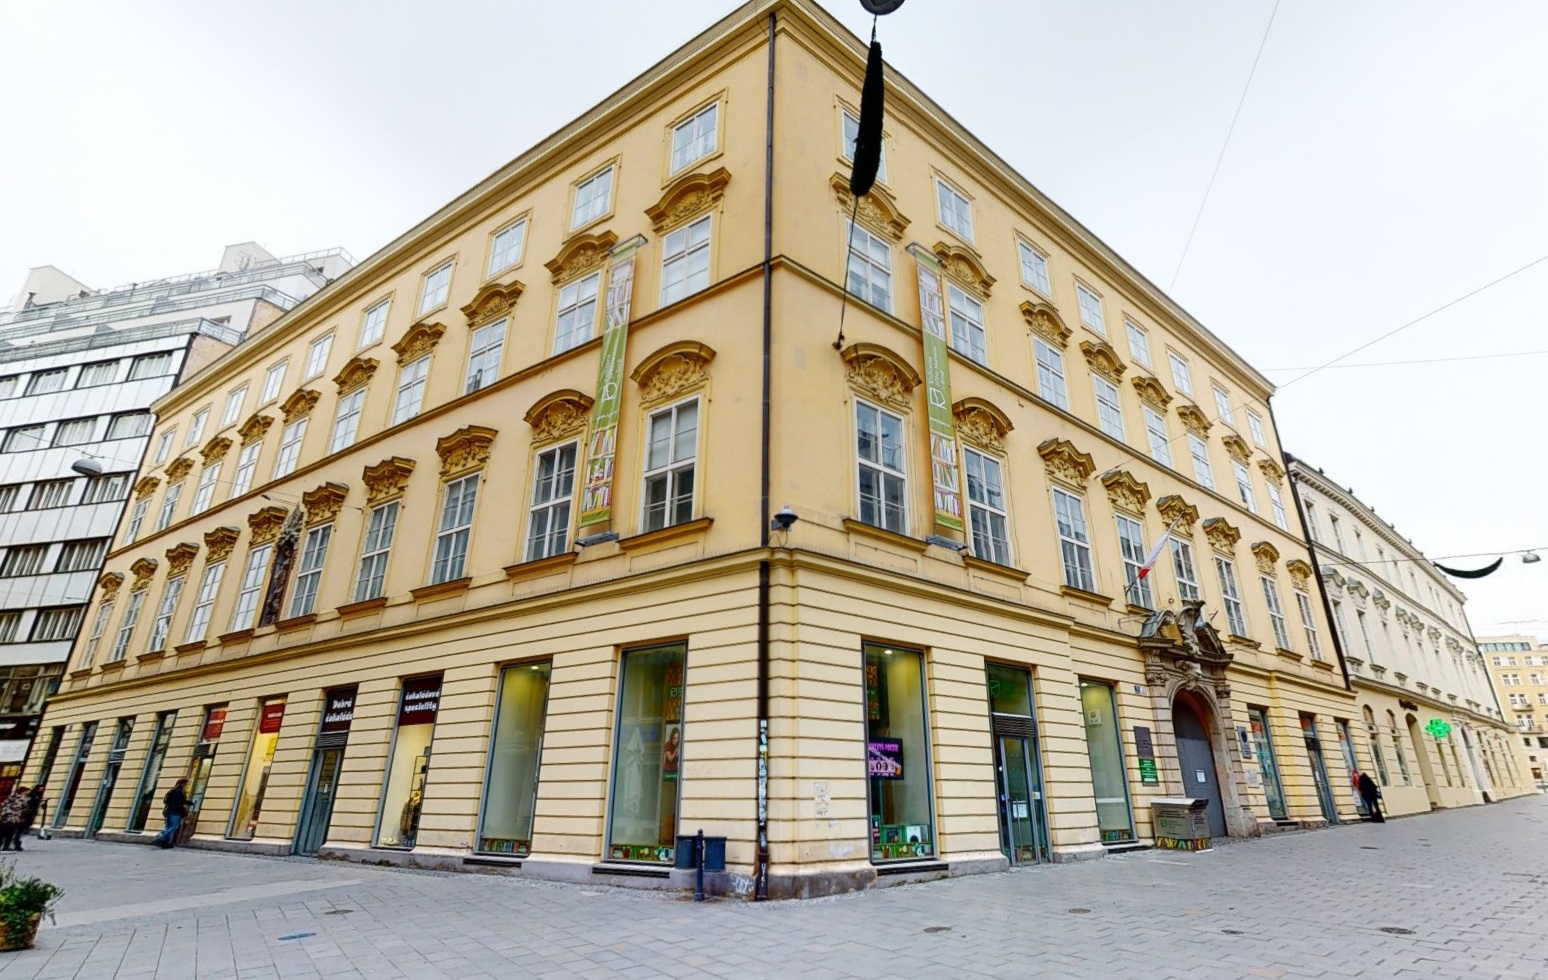 Schrattenbach Palace​​​​​​​​​​​​​​​​​​​​​​​​ – Central Library​​​​​​​ Jiří Mahen Library in Brno&nbsp;